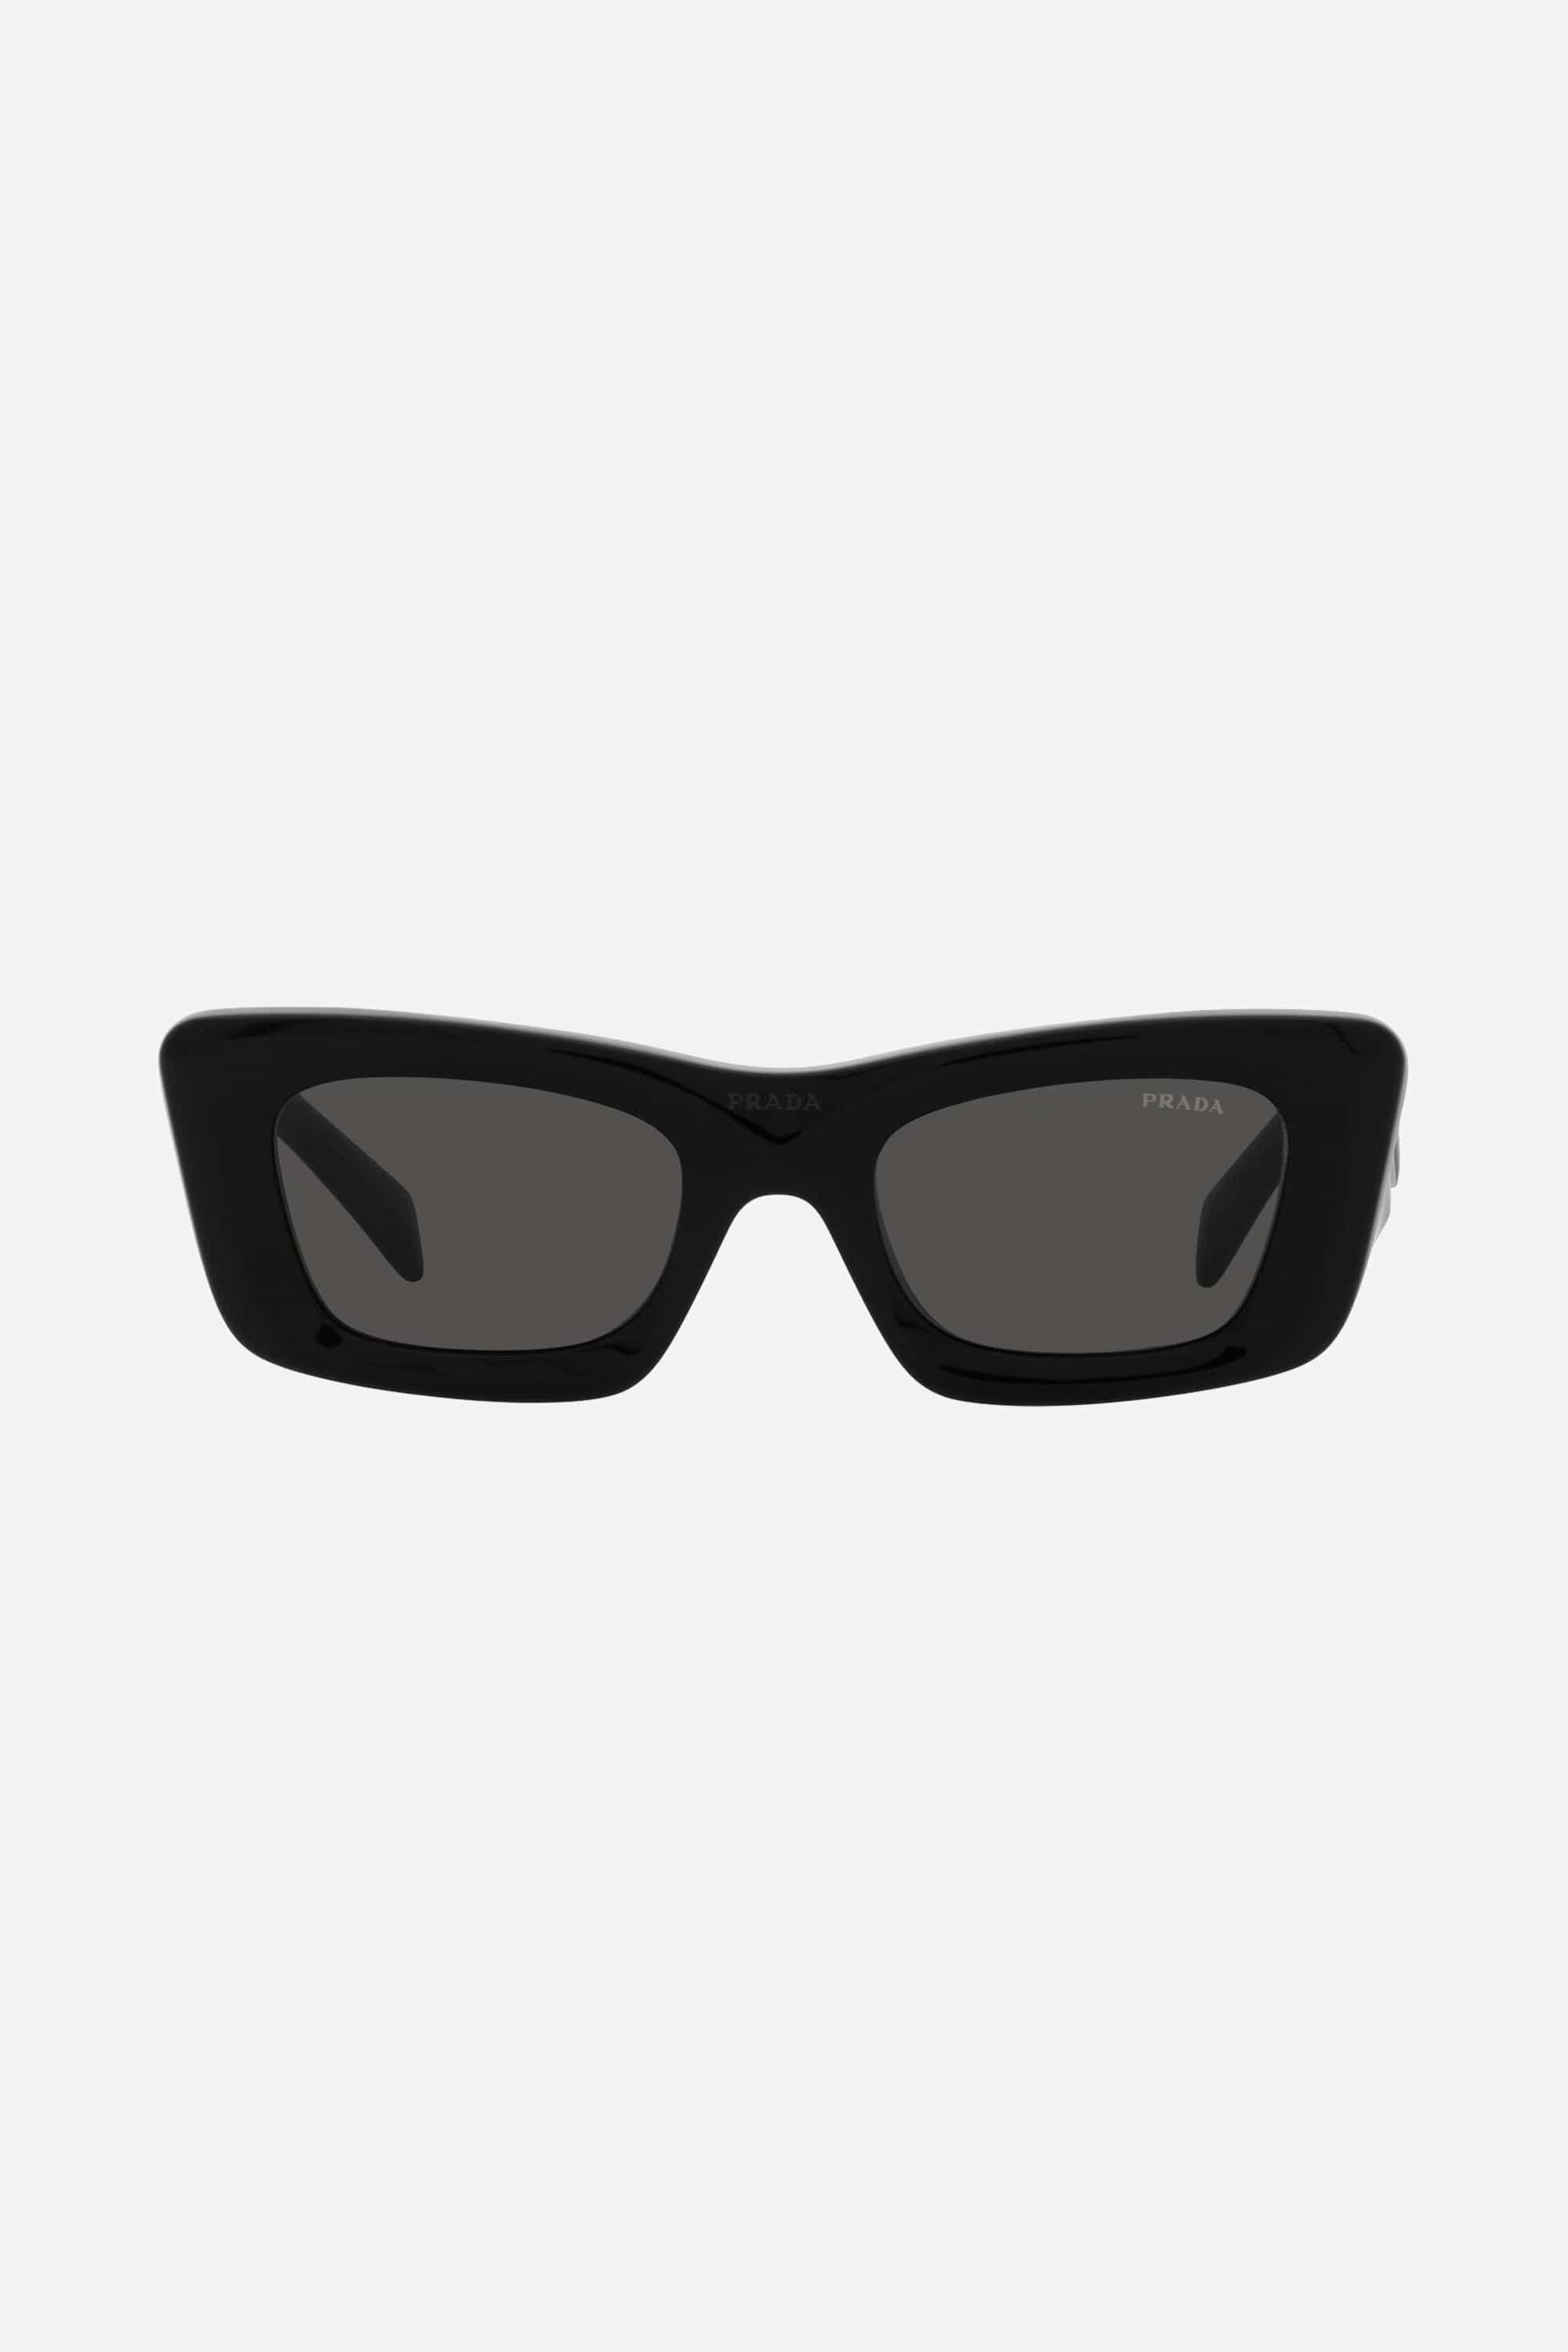 Prada Cat-eye Black Sunglasses Catwalk | Lyst